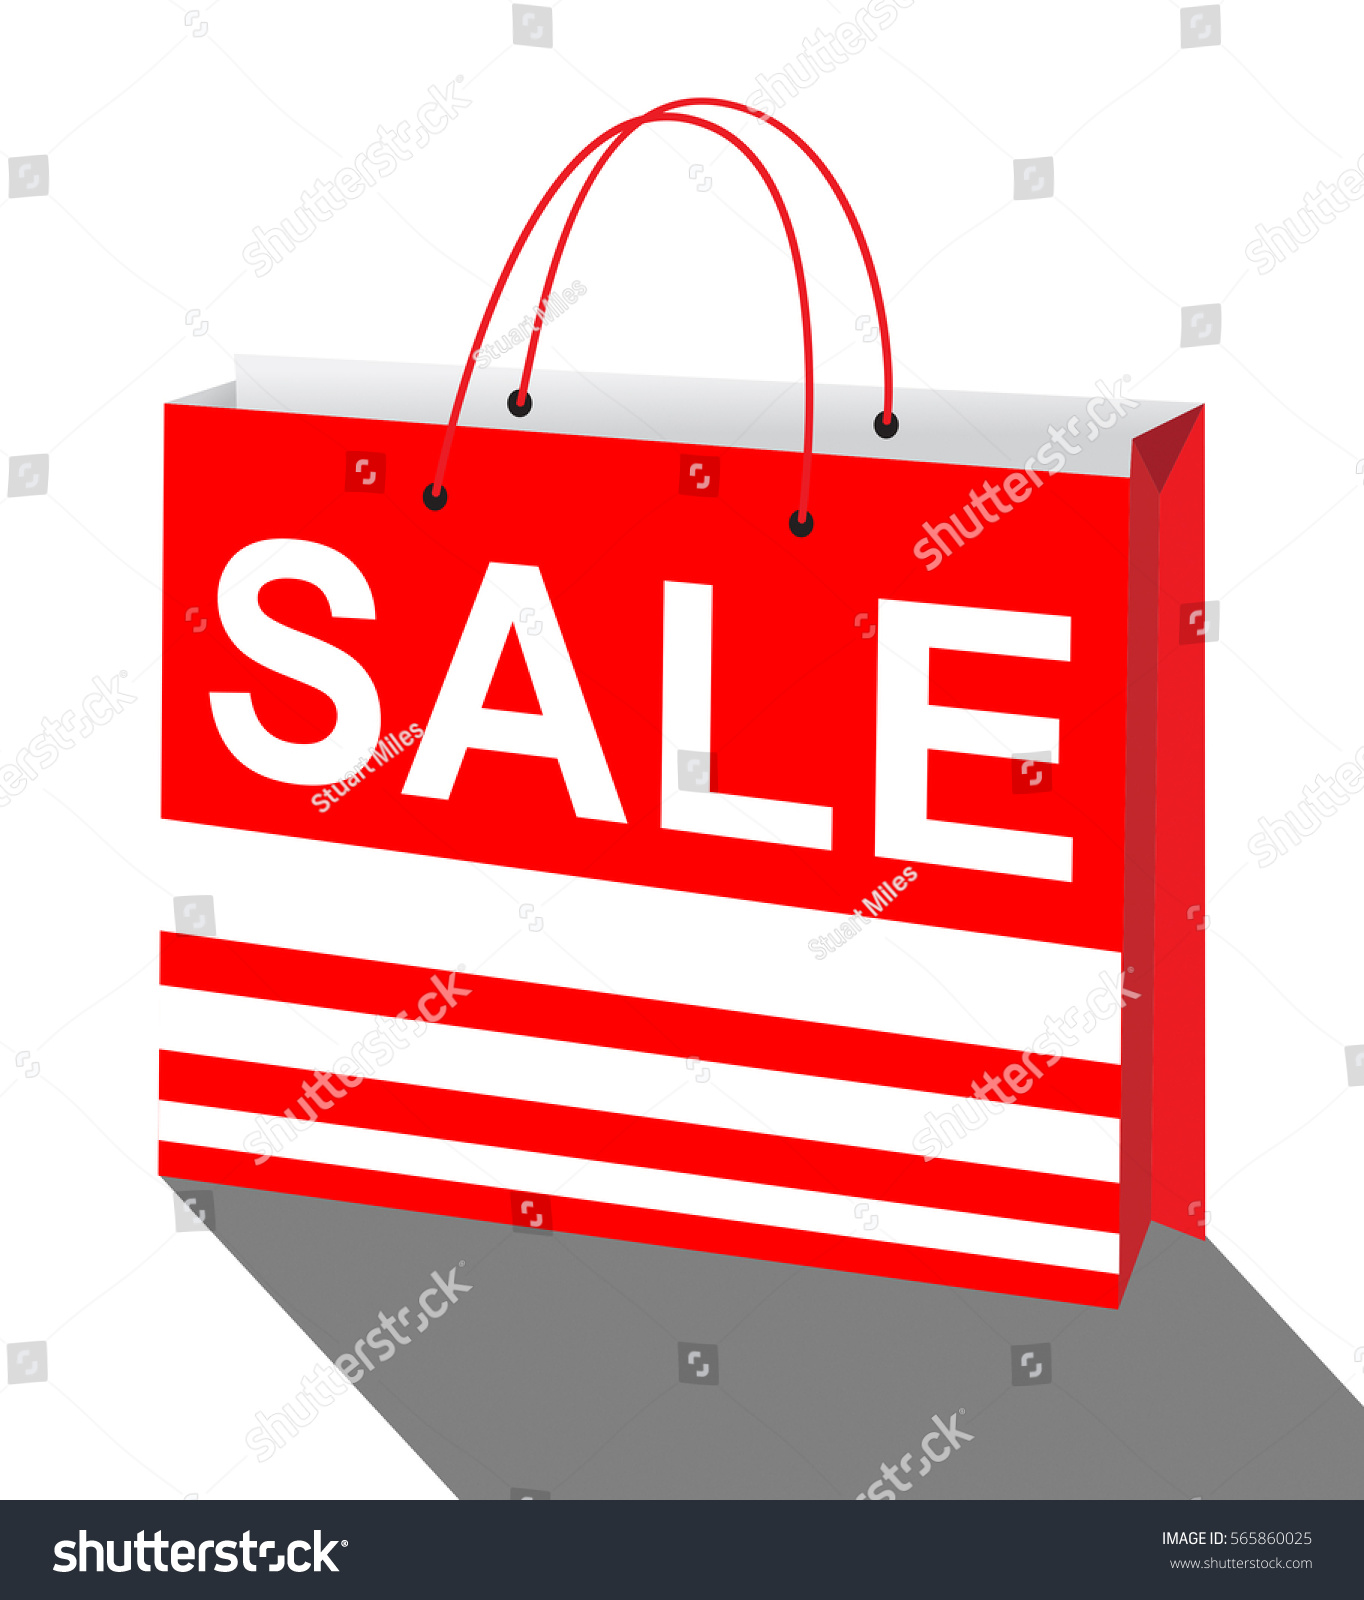 Sale Shopping Bag Represents Bargain Offers Stock Illustration ...